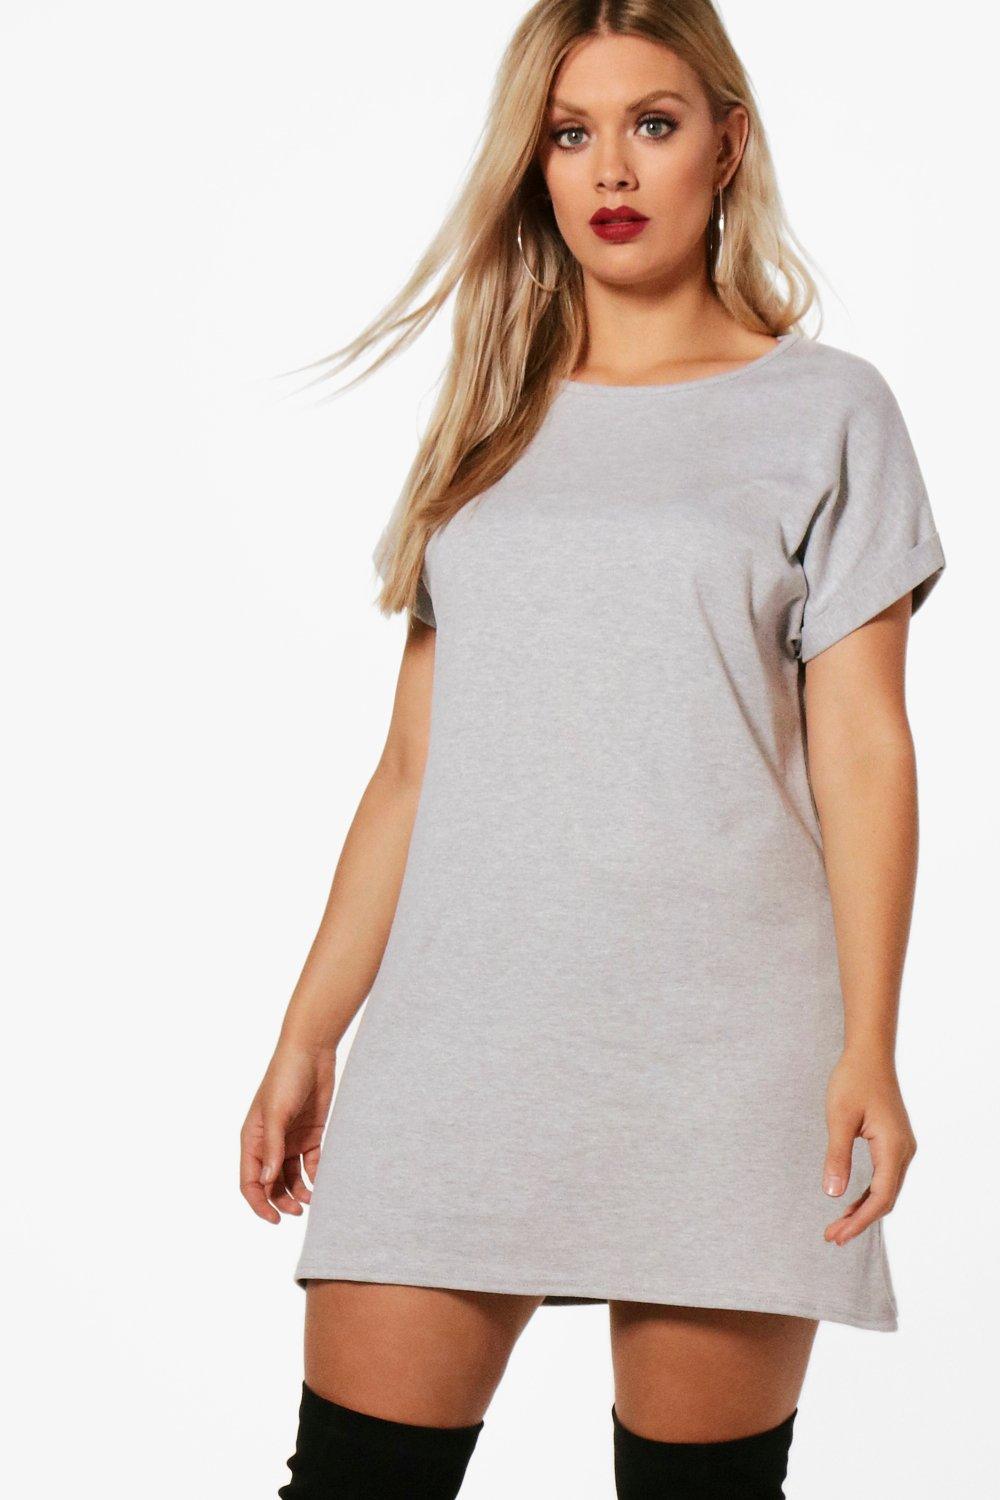 Boohoo Womens Plus Daisy Oversized Roll Up T-Shirt Dress | eBay